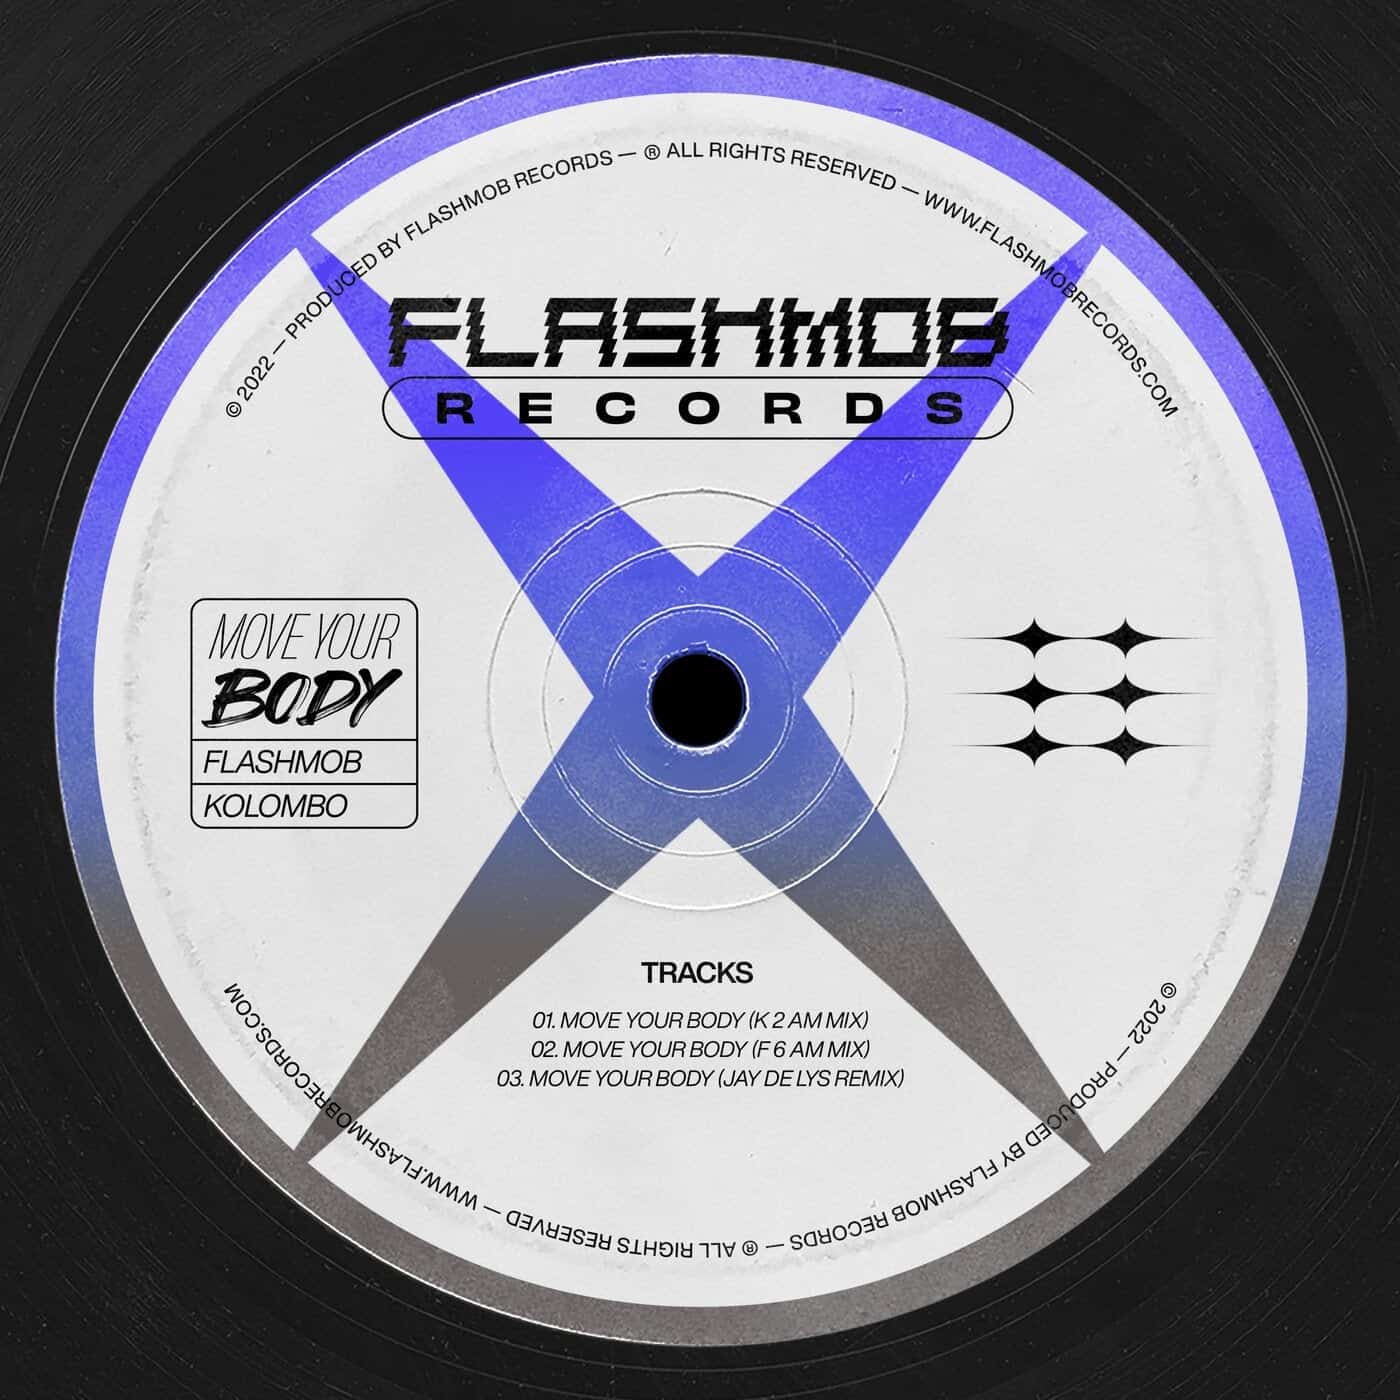 Download Kolombo, Flashmob - Move Your Body on Electrobuzz